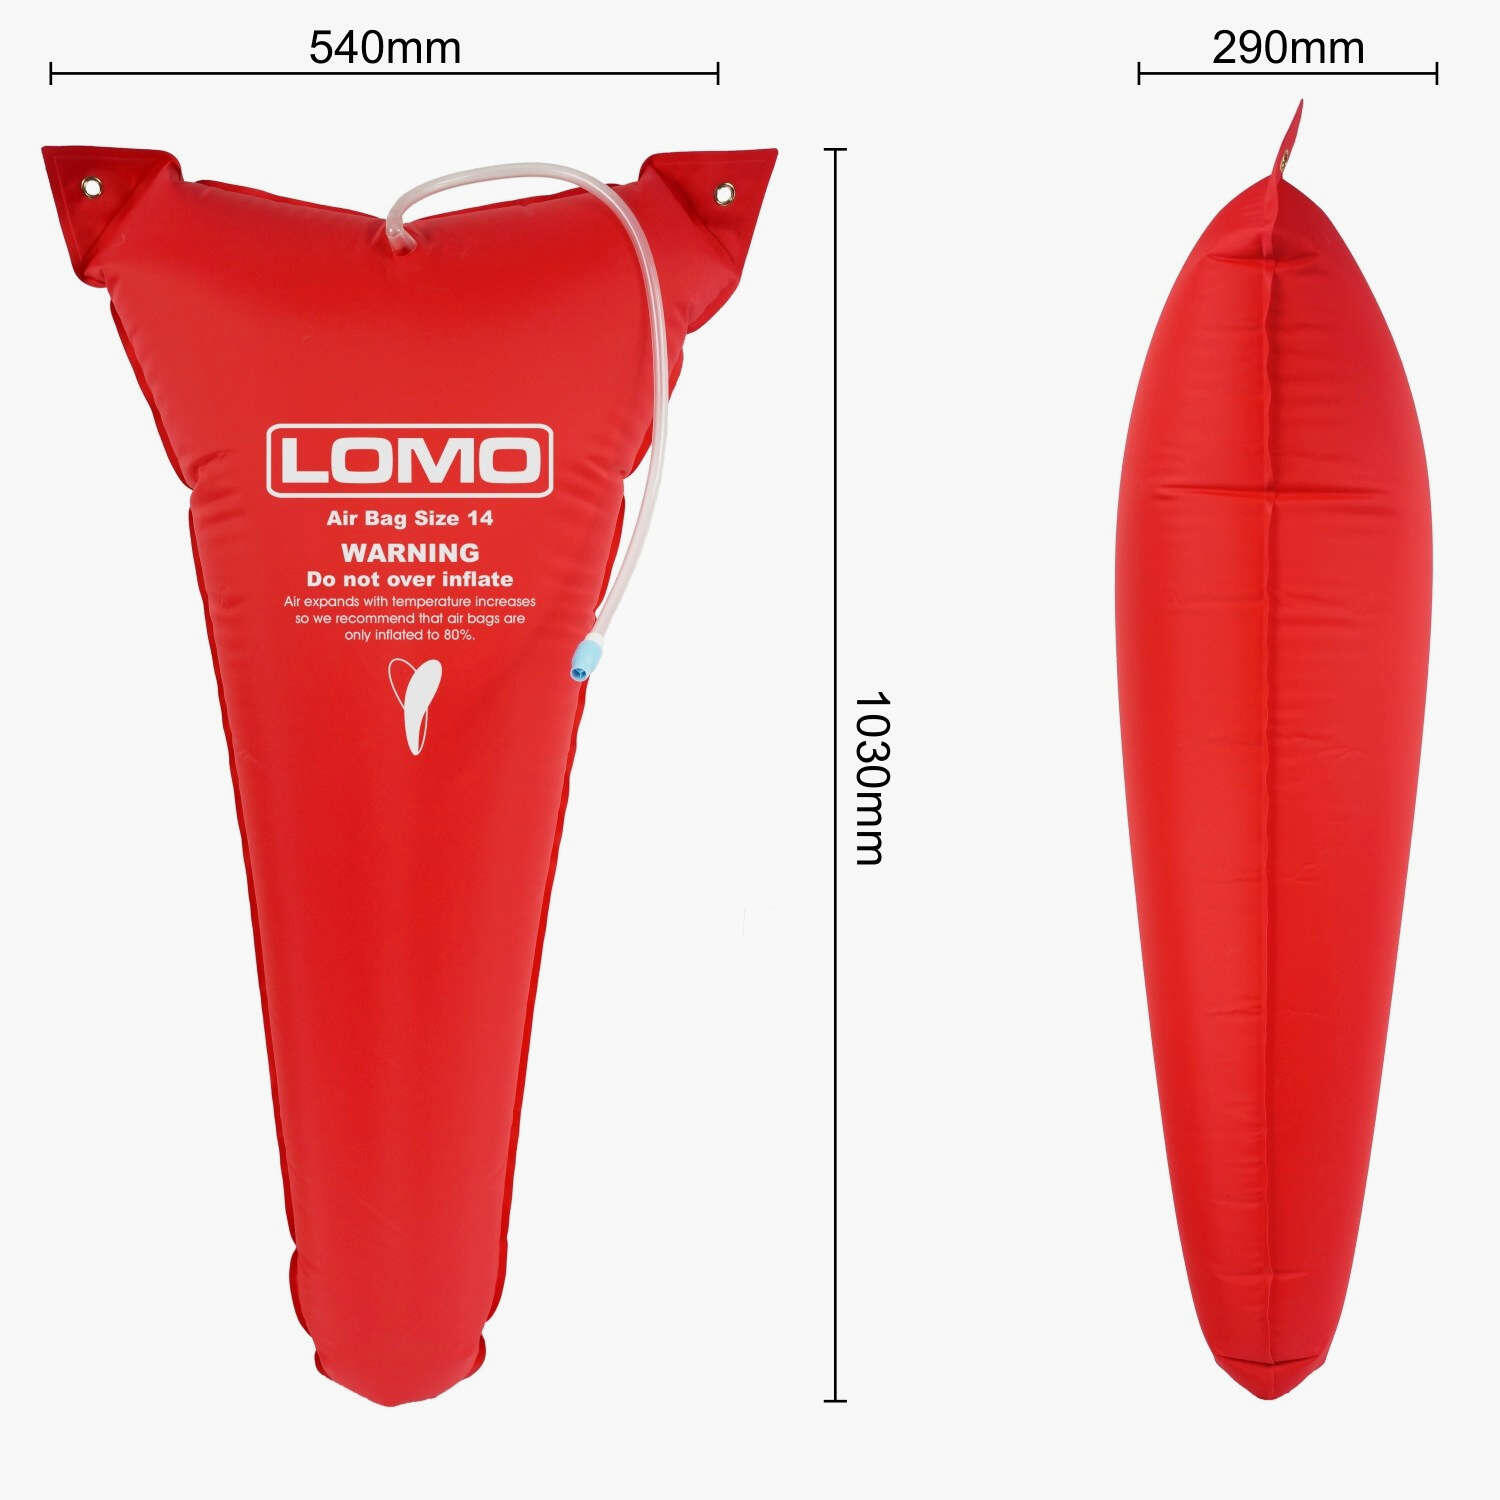 Lomo Kayak Buoyancy Bag - Main Hatch. Size 14 2/4